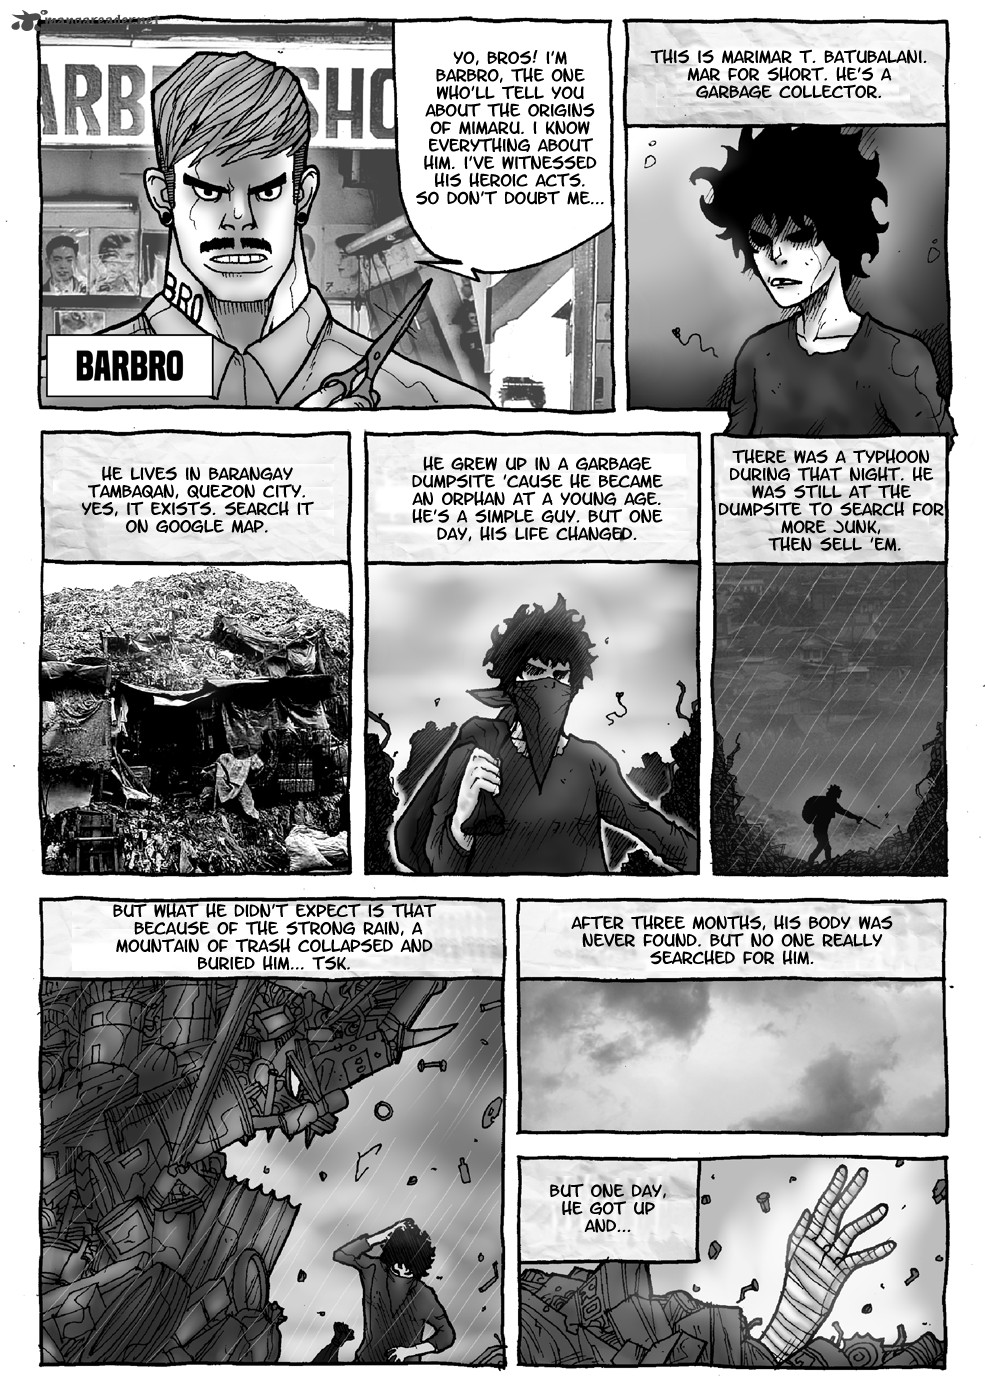 Mimaru The Dirty Ninja Chapter 1 Page 2